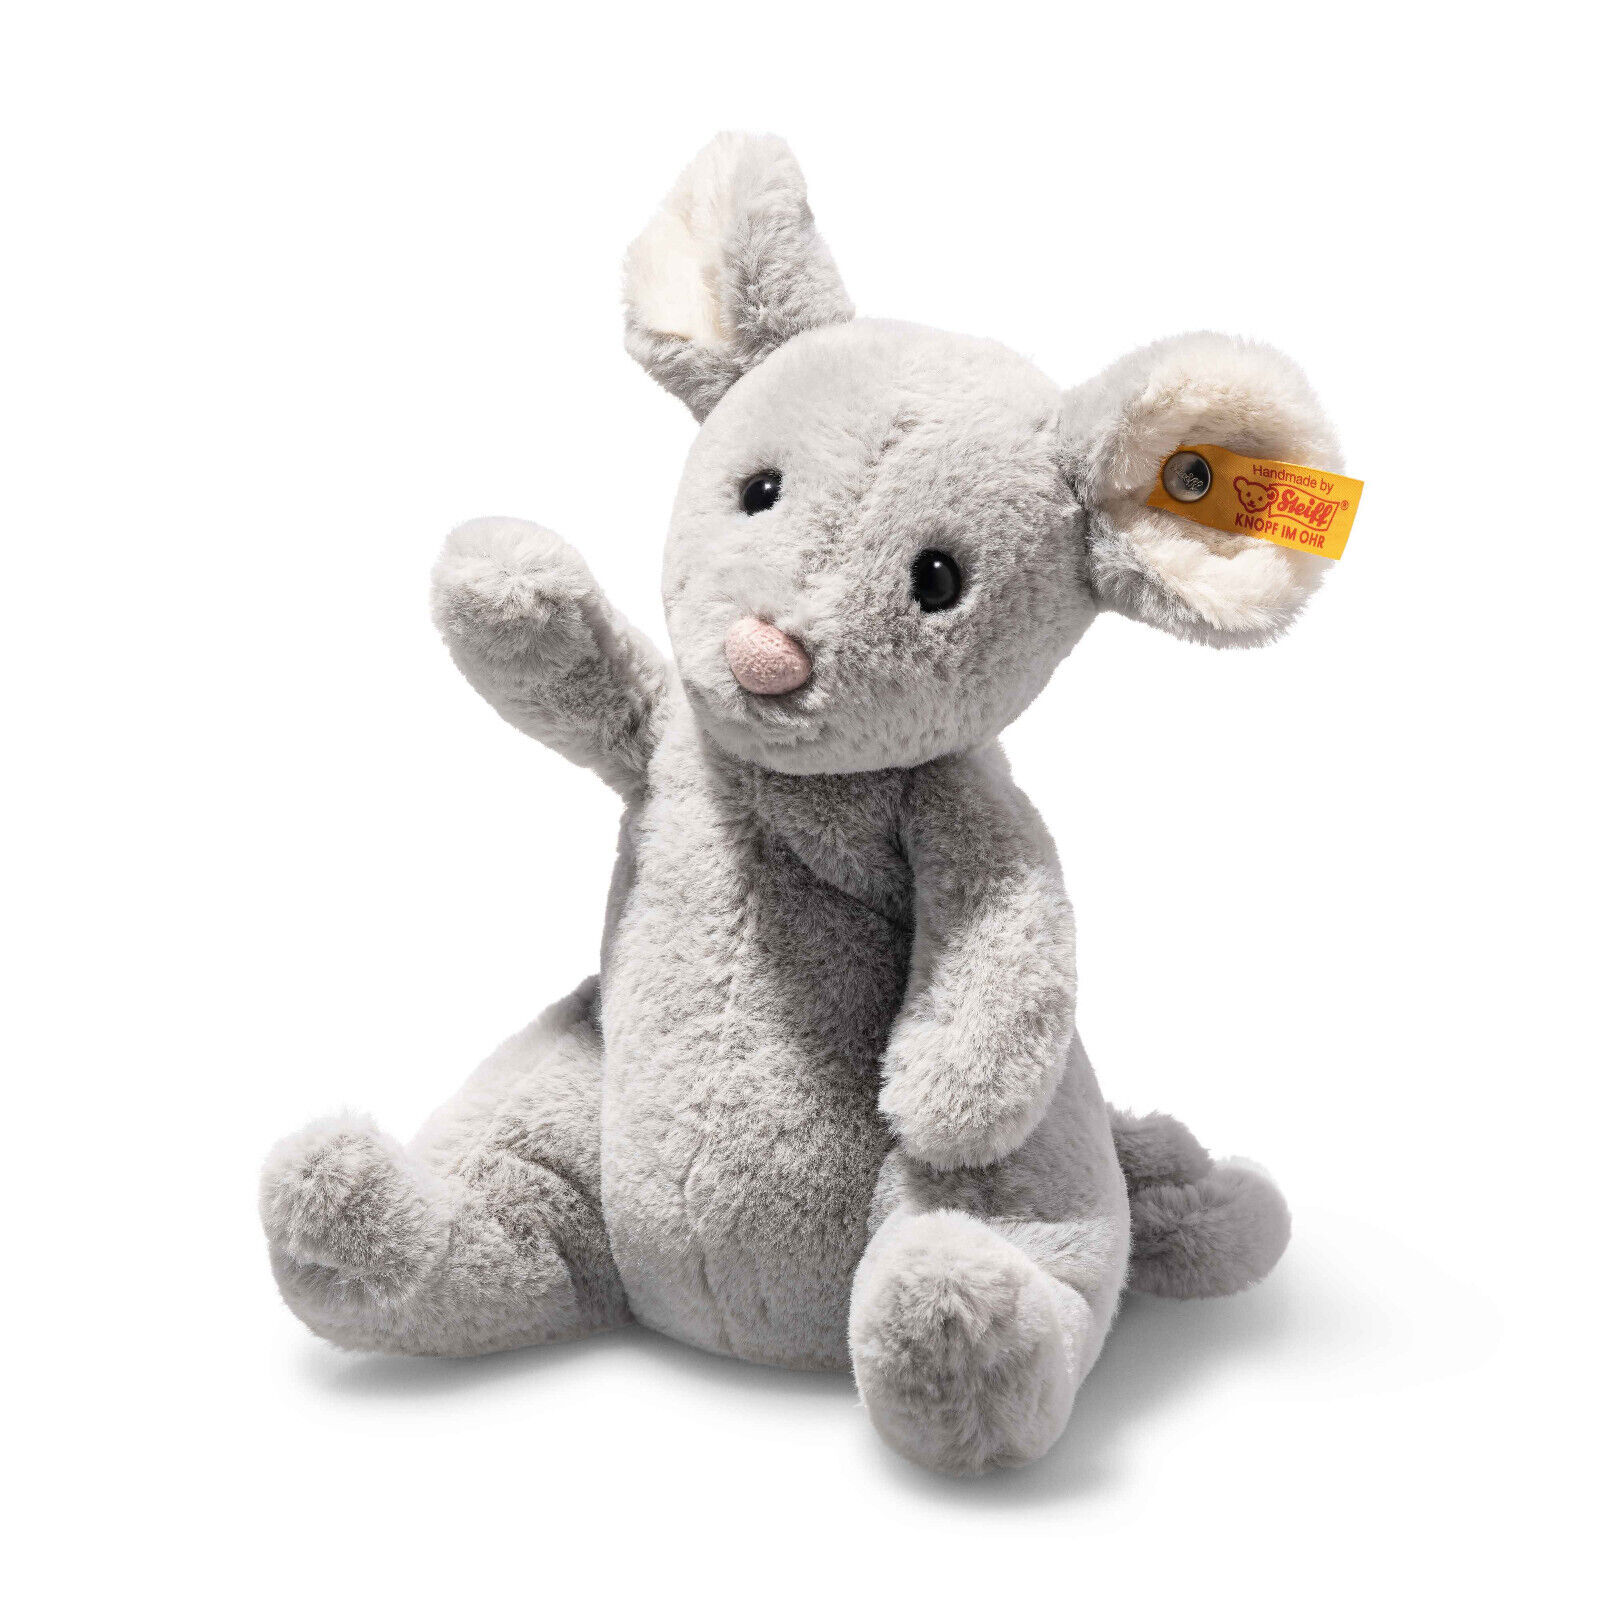 STEIFF Cheesy Maus 19 cm blaugrau 056246  'Soft Cuddly Friends' - für Kinder 